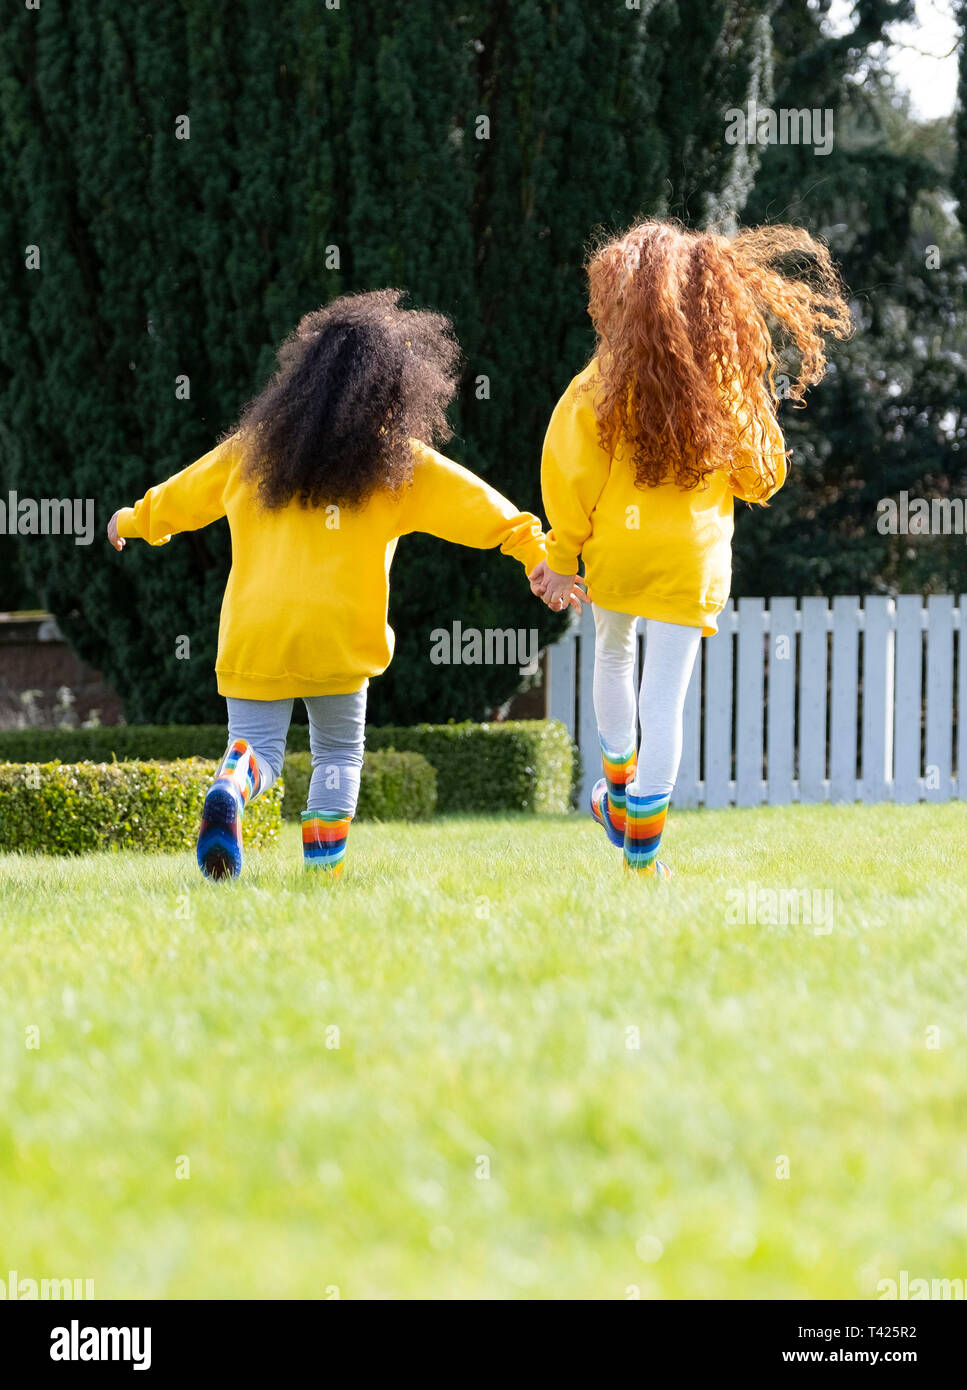 Children skipping enjoying playing outside Stock Photo